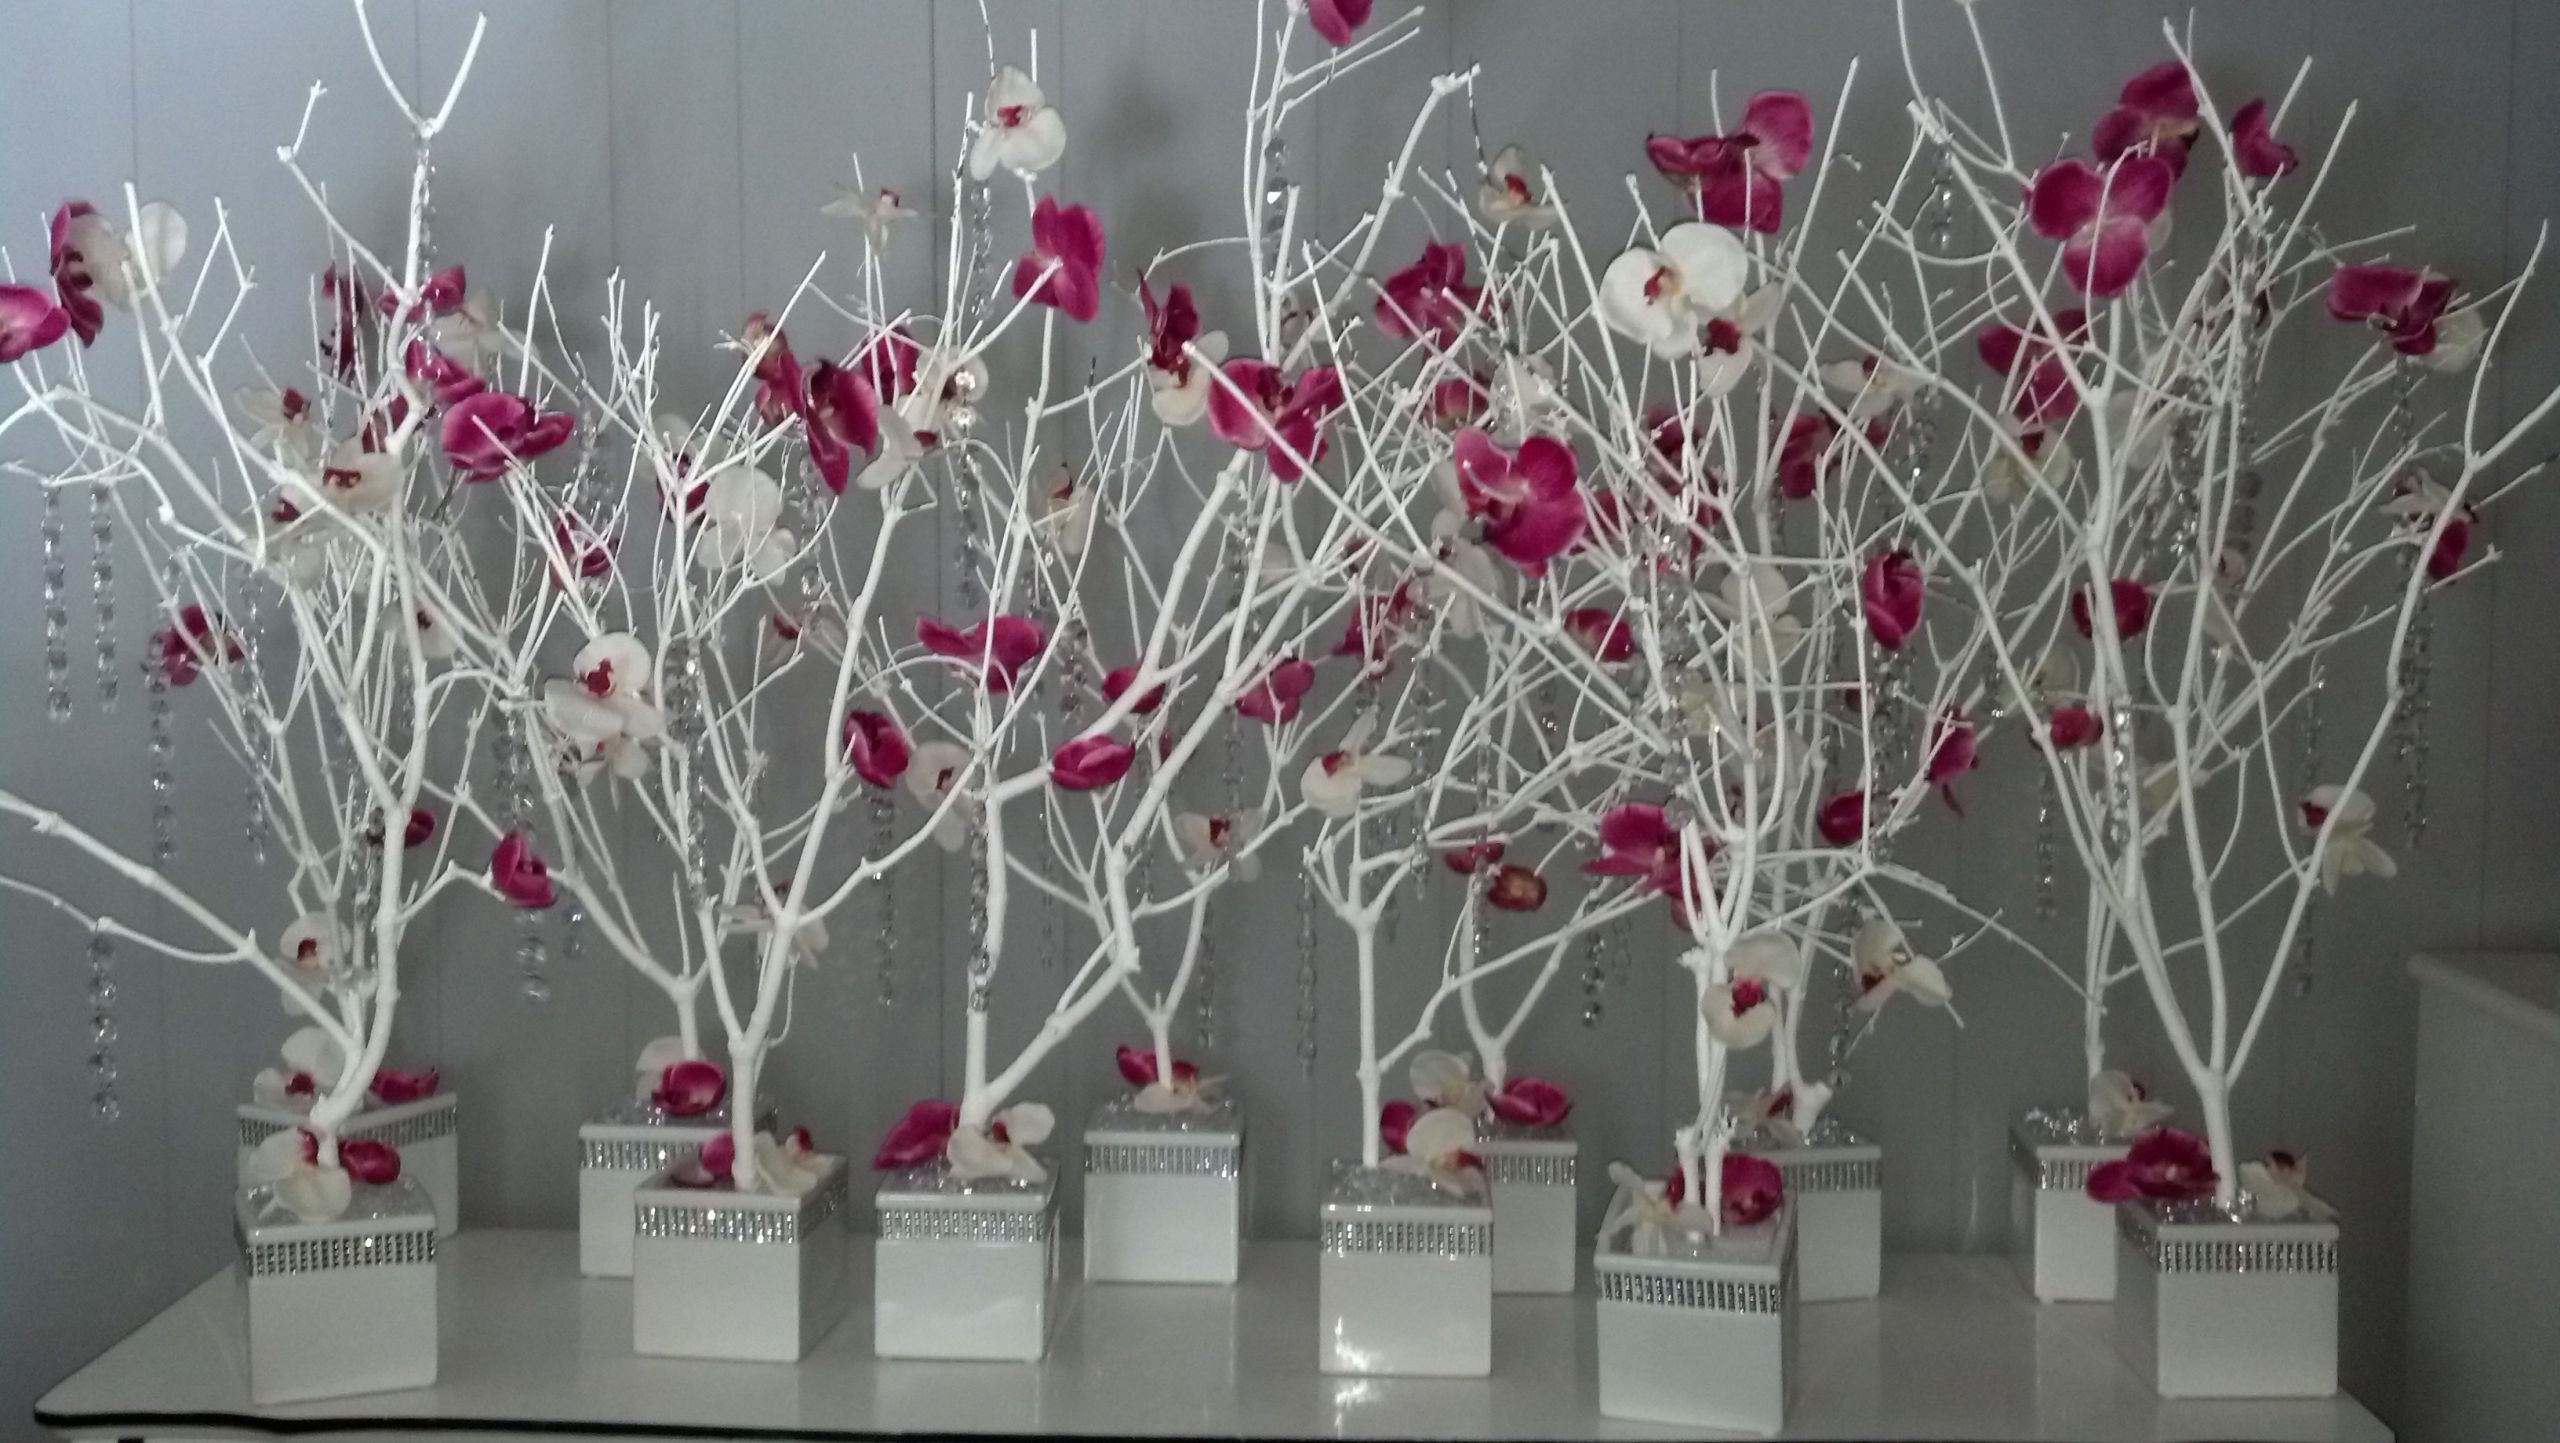 DIY Wedding Centerpieces With Branches
 dollar tree wedding centerpiece ideas Wedding Decor Ideas